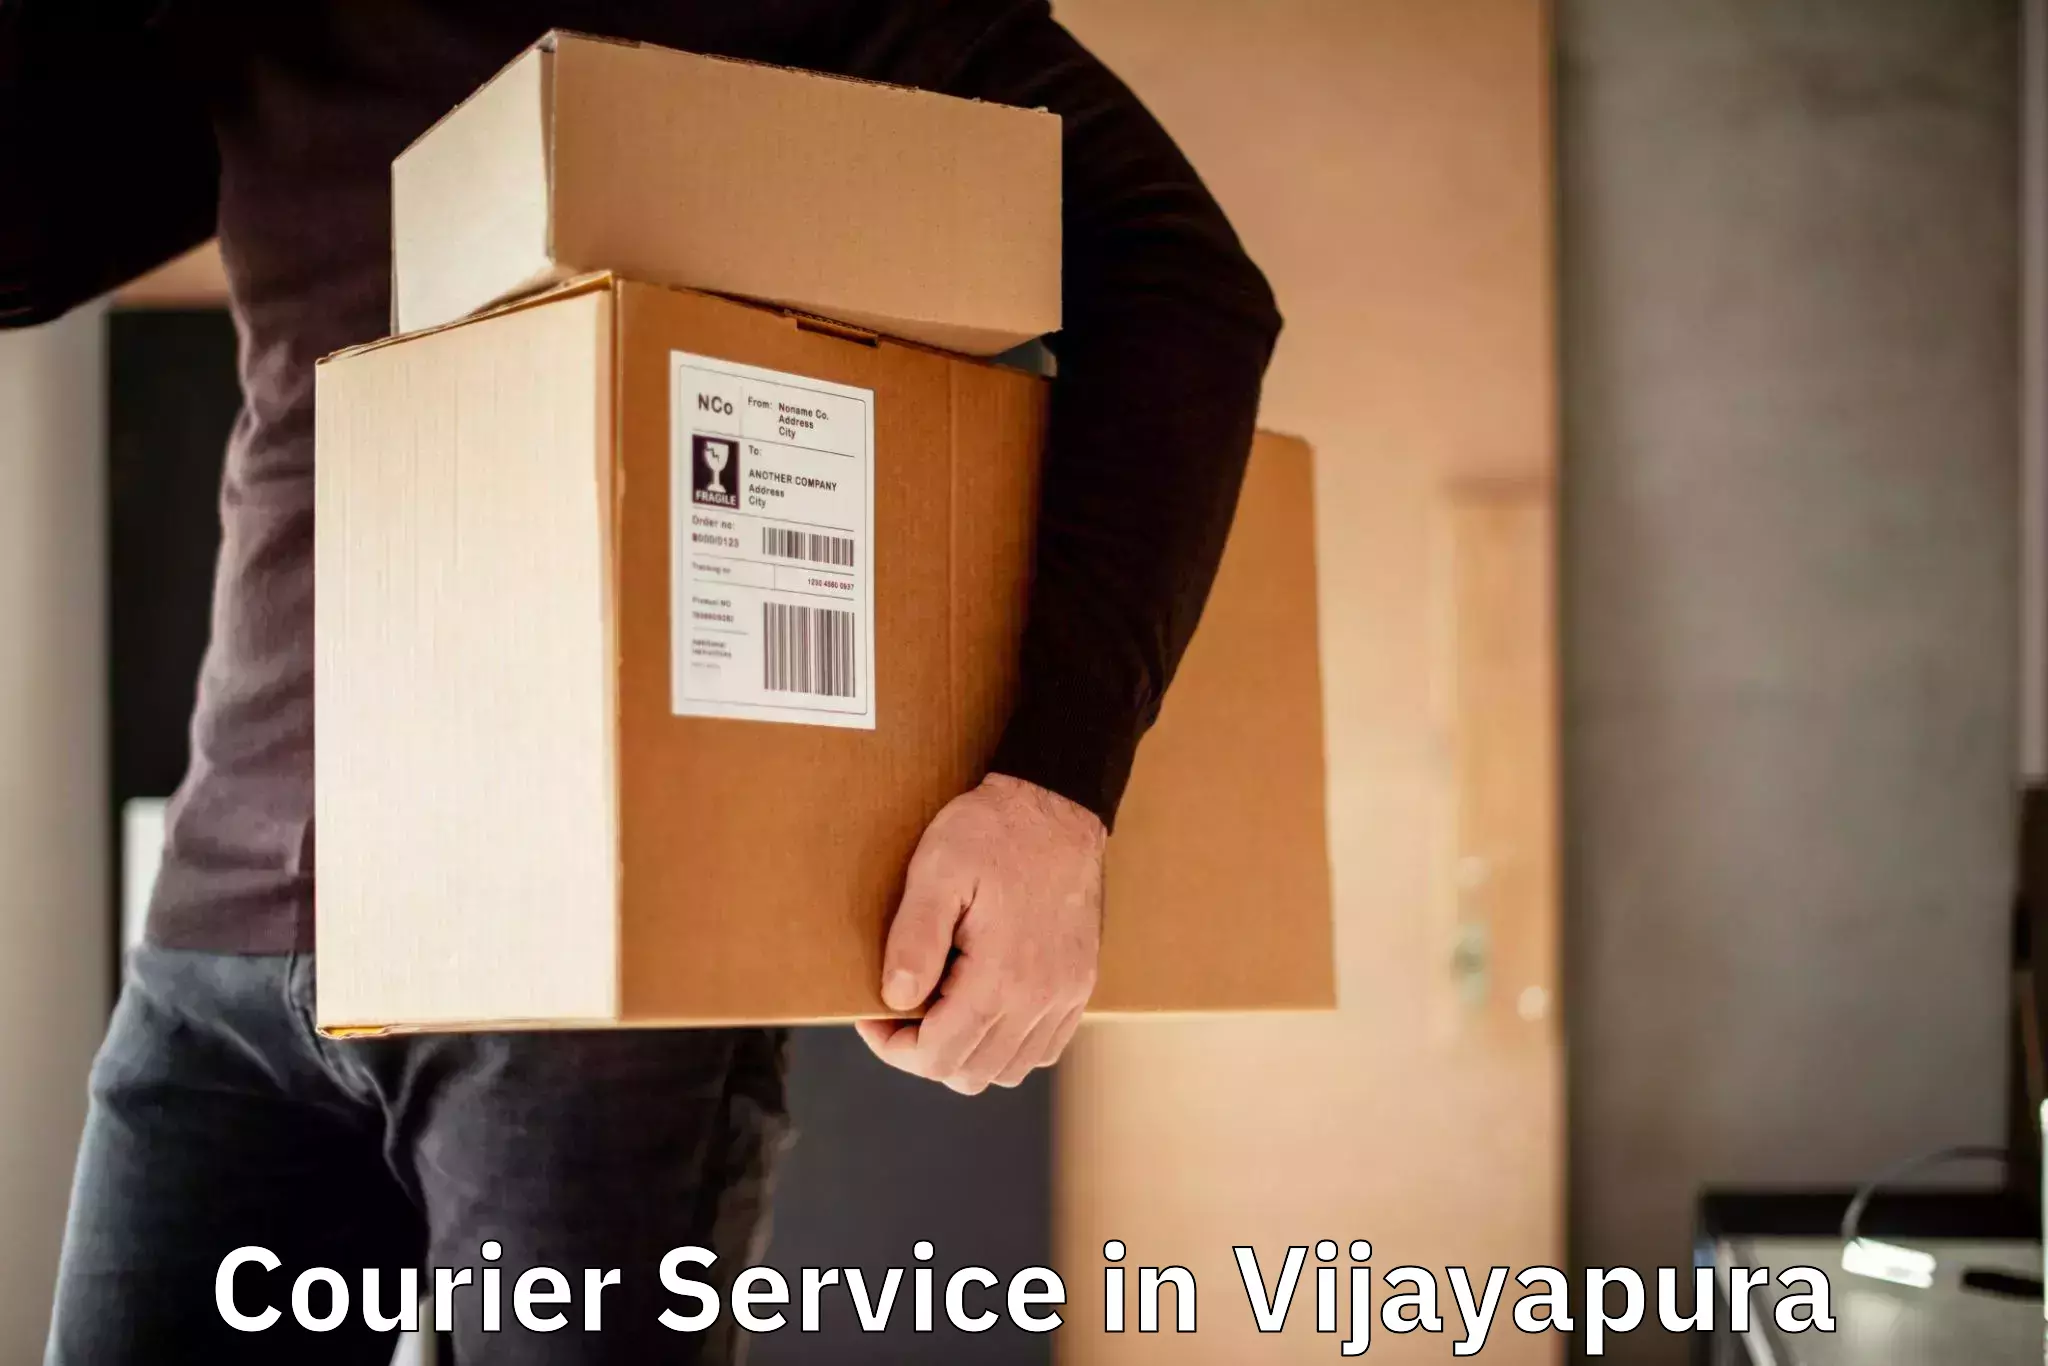 Optimized delivery routes in Vijayapura